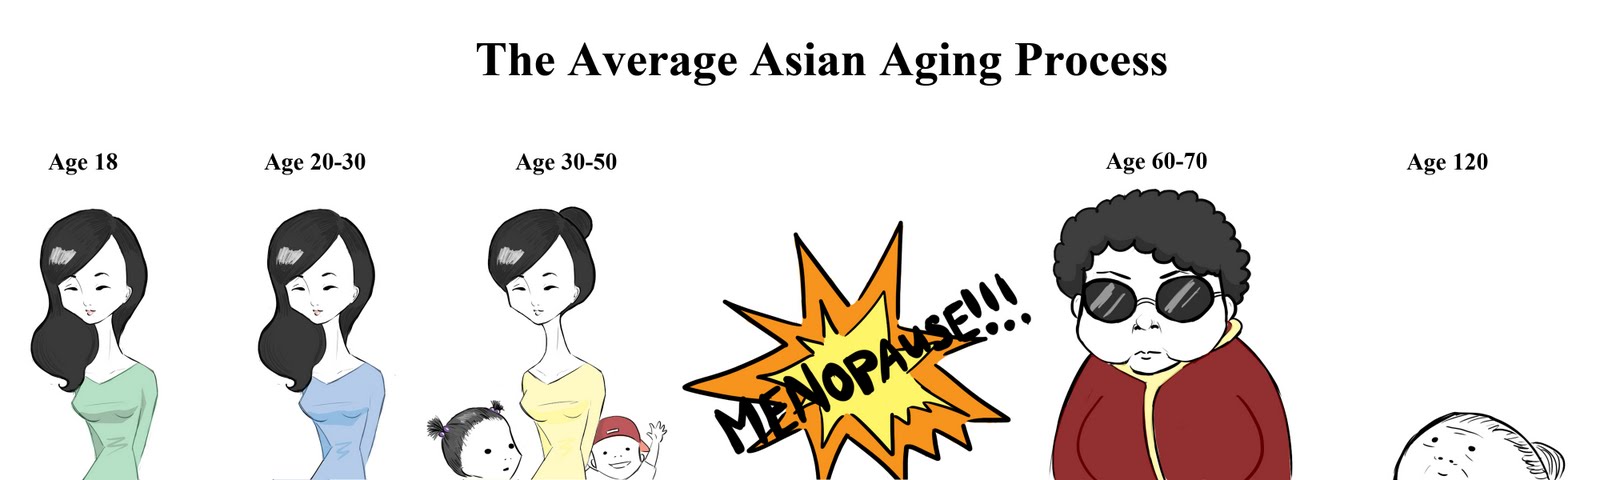 Age Asian Women 84